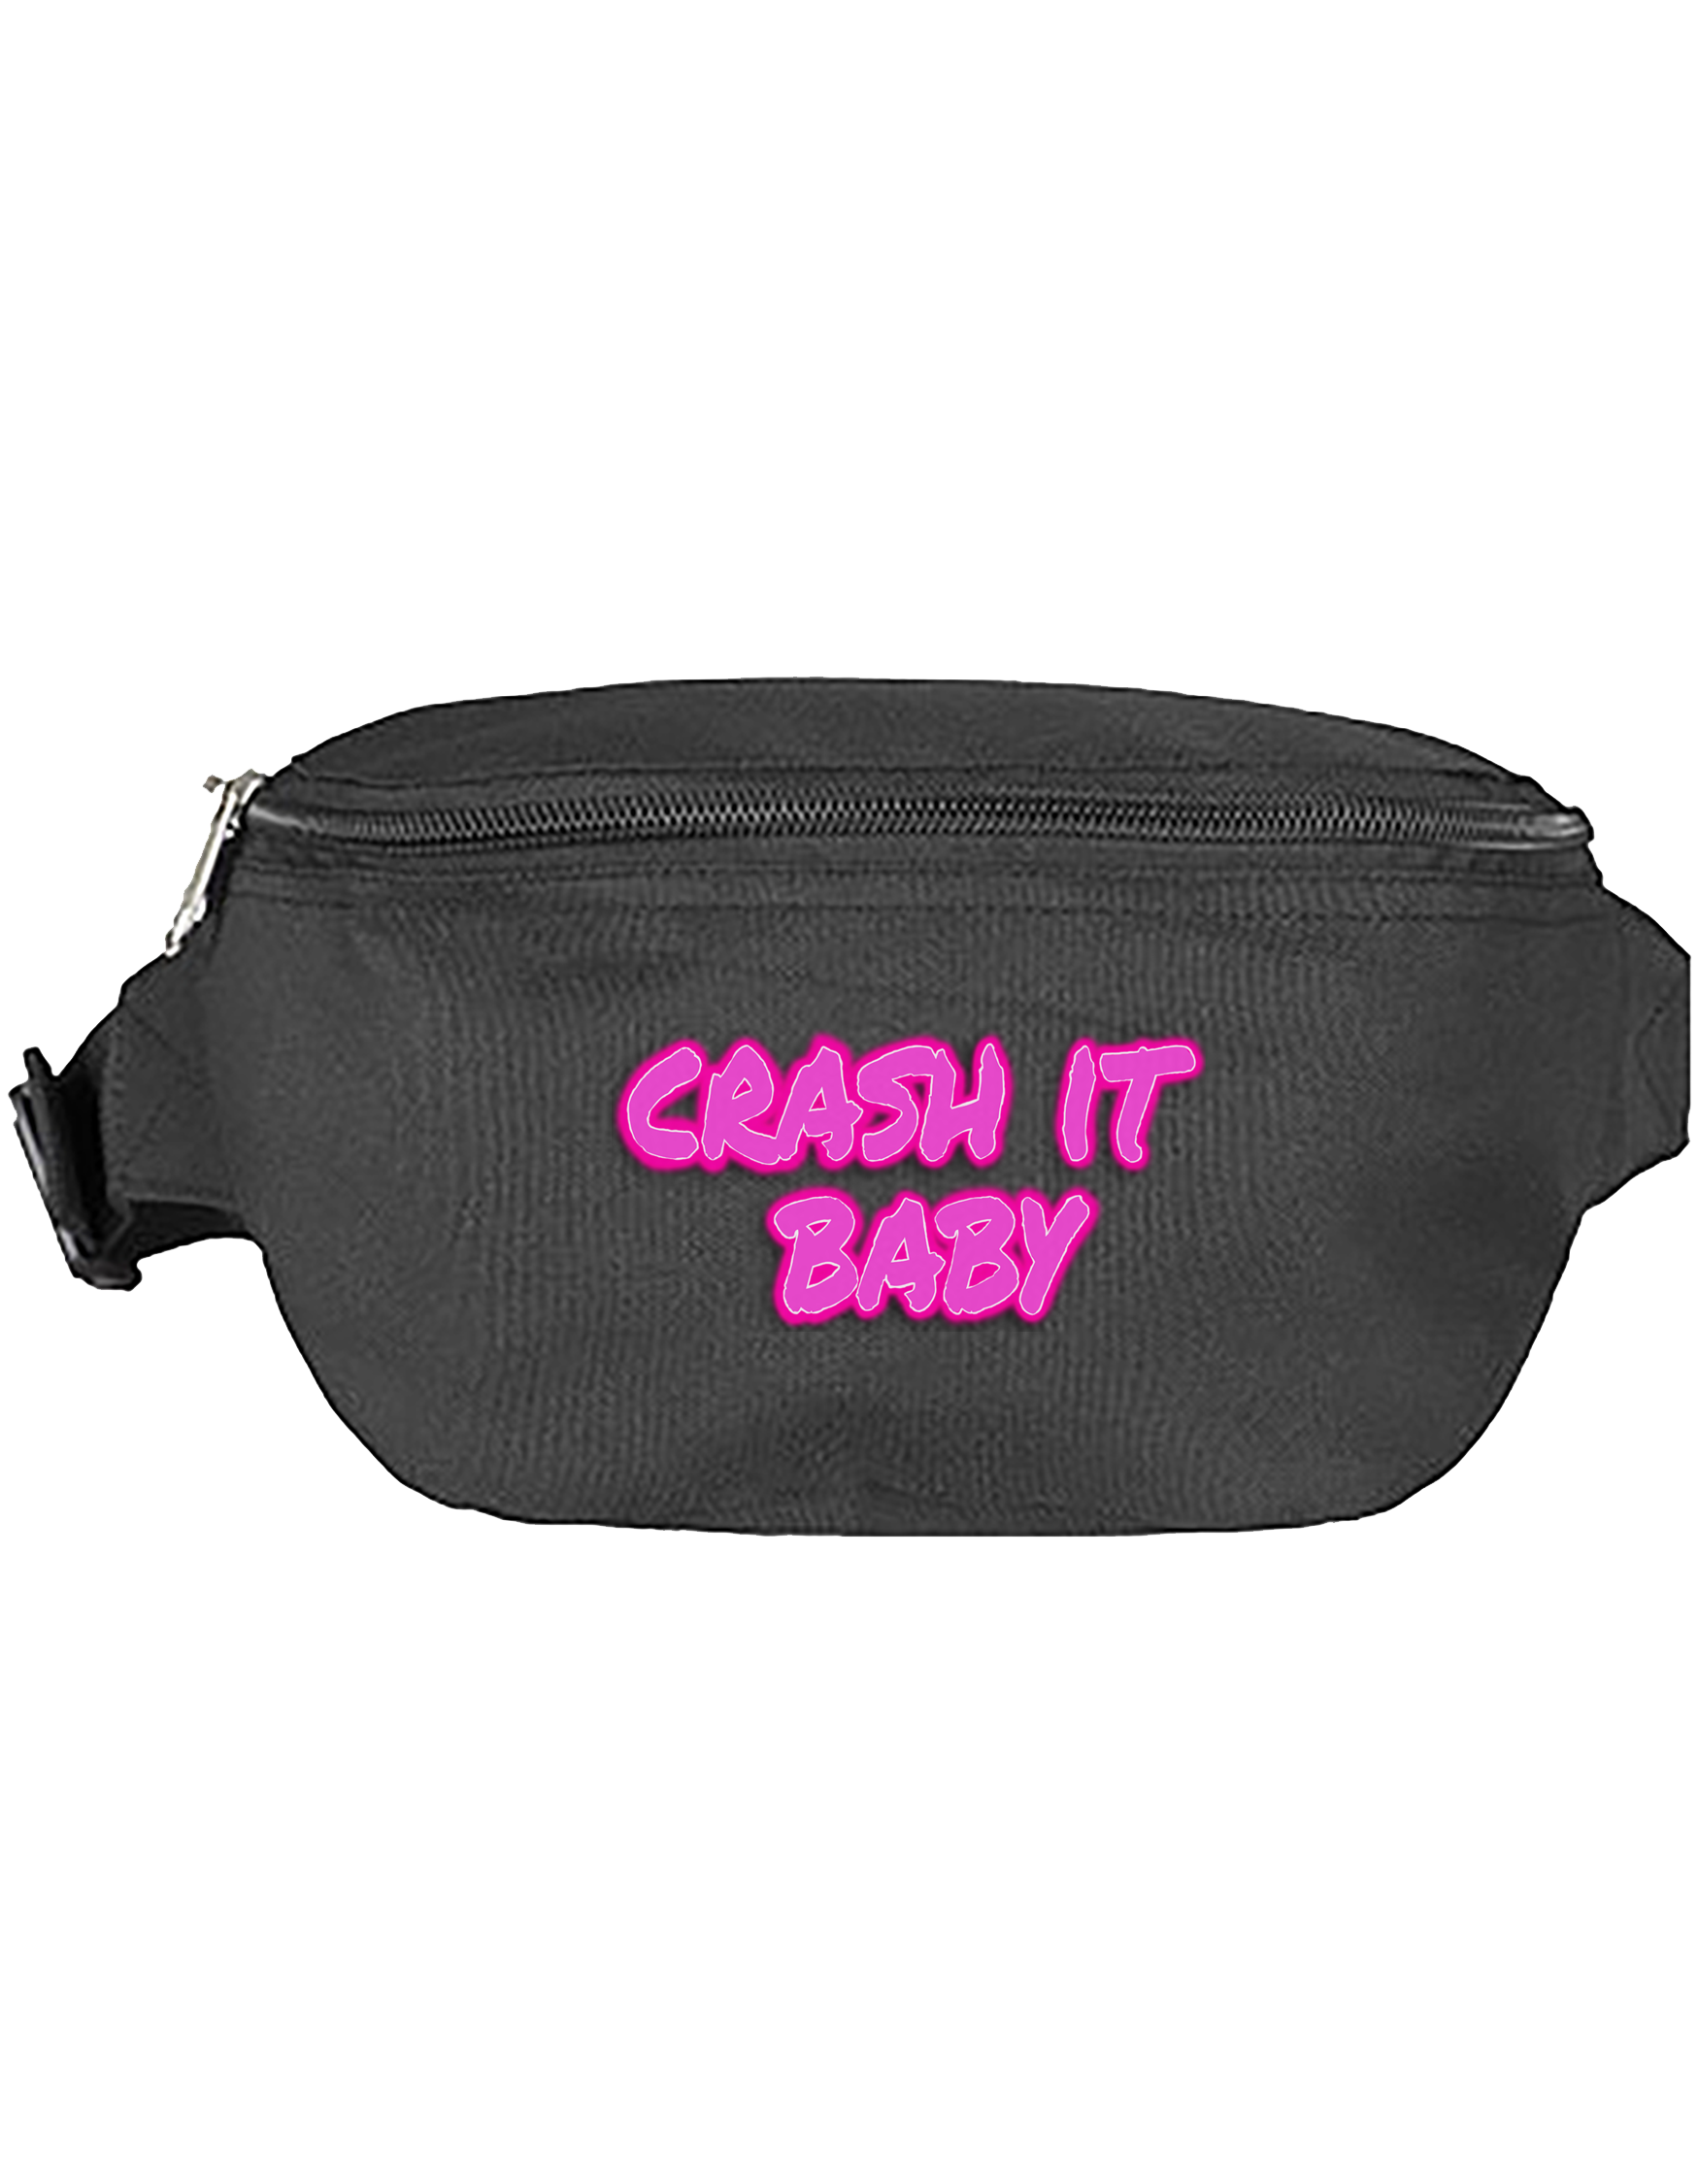 Partycrasher - Crash it Baby Hip Bag [schwarz]